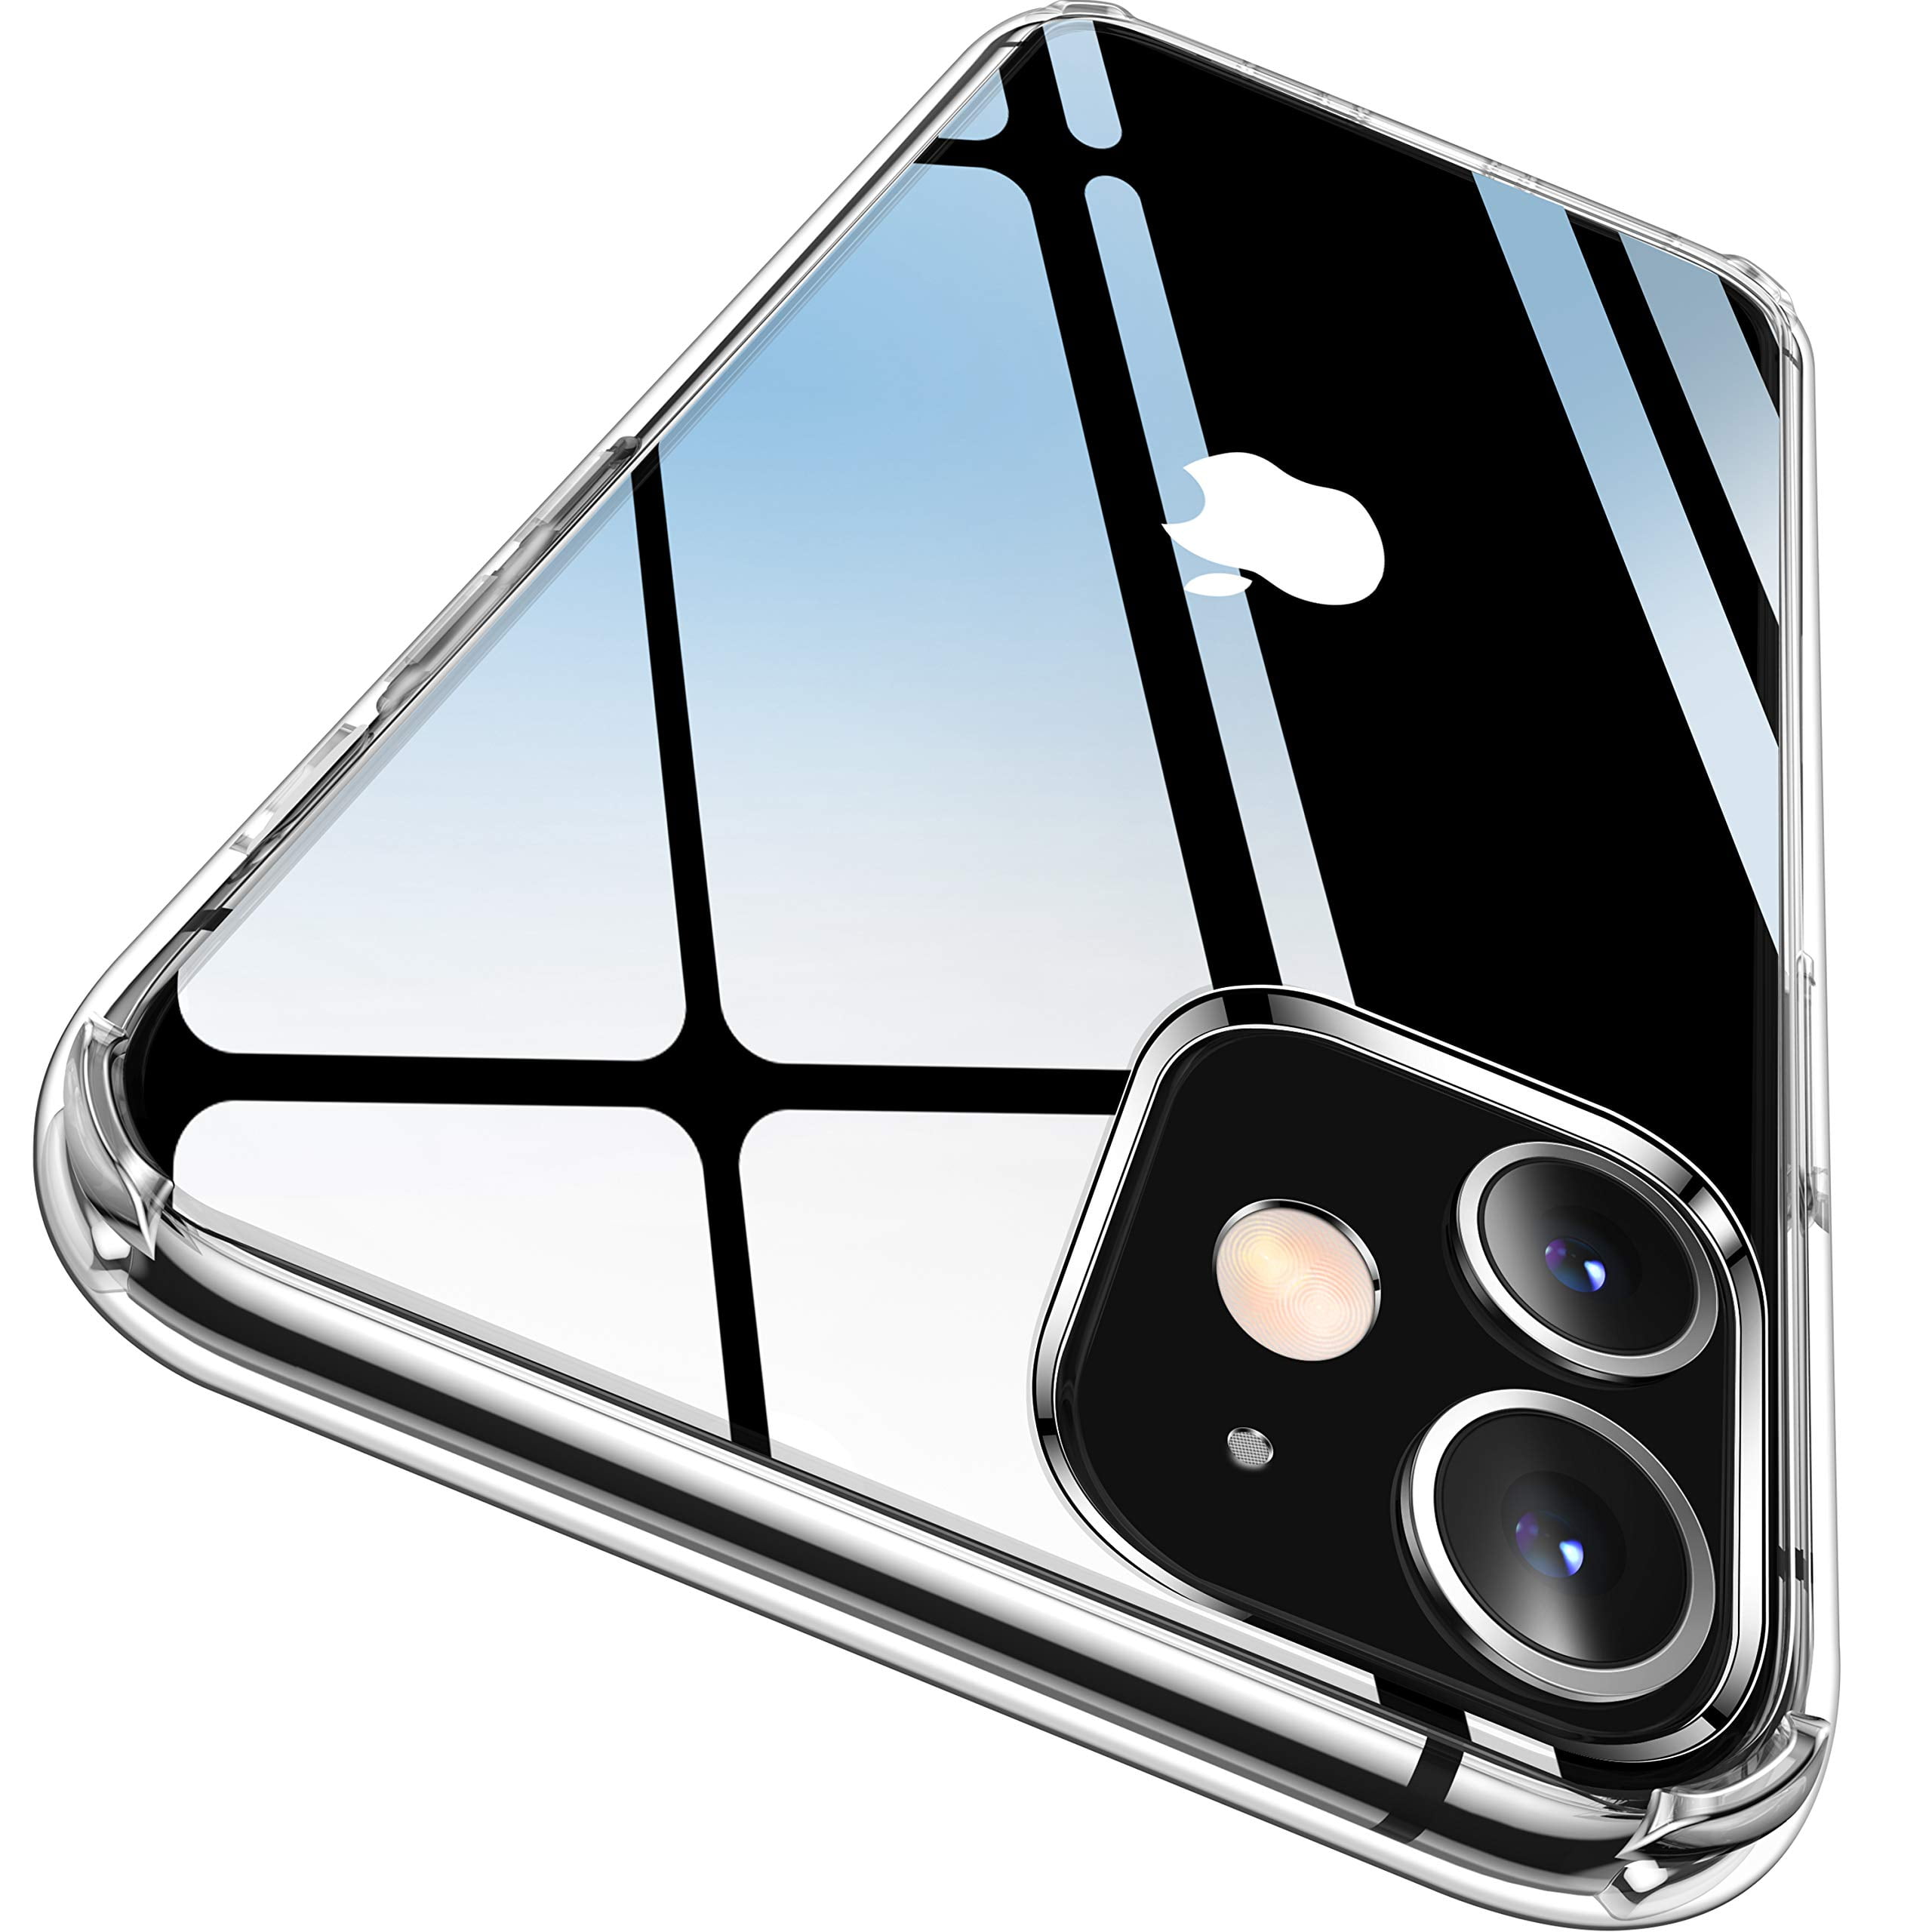 Silber CASEKOO Ultra Dünn Kompatibel mit iPhone 12 Pro Max Hülle Slim Handyhülle Mattem Finish Case with Kratzfest Schutz Hard PC Back 6,7 Zoll 5G 2020